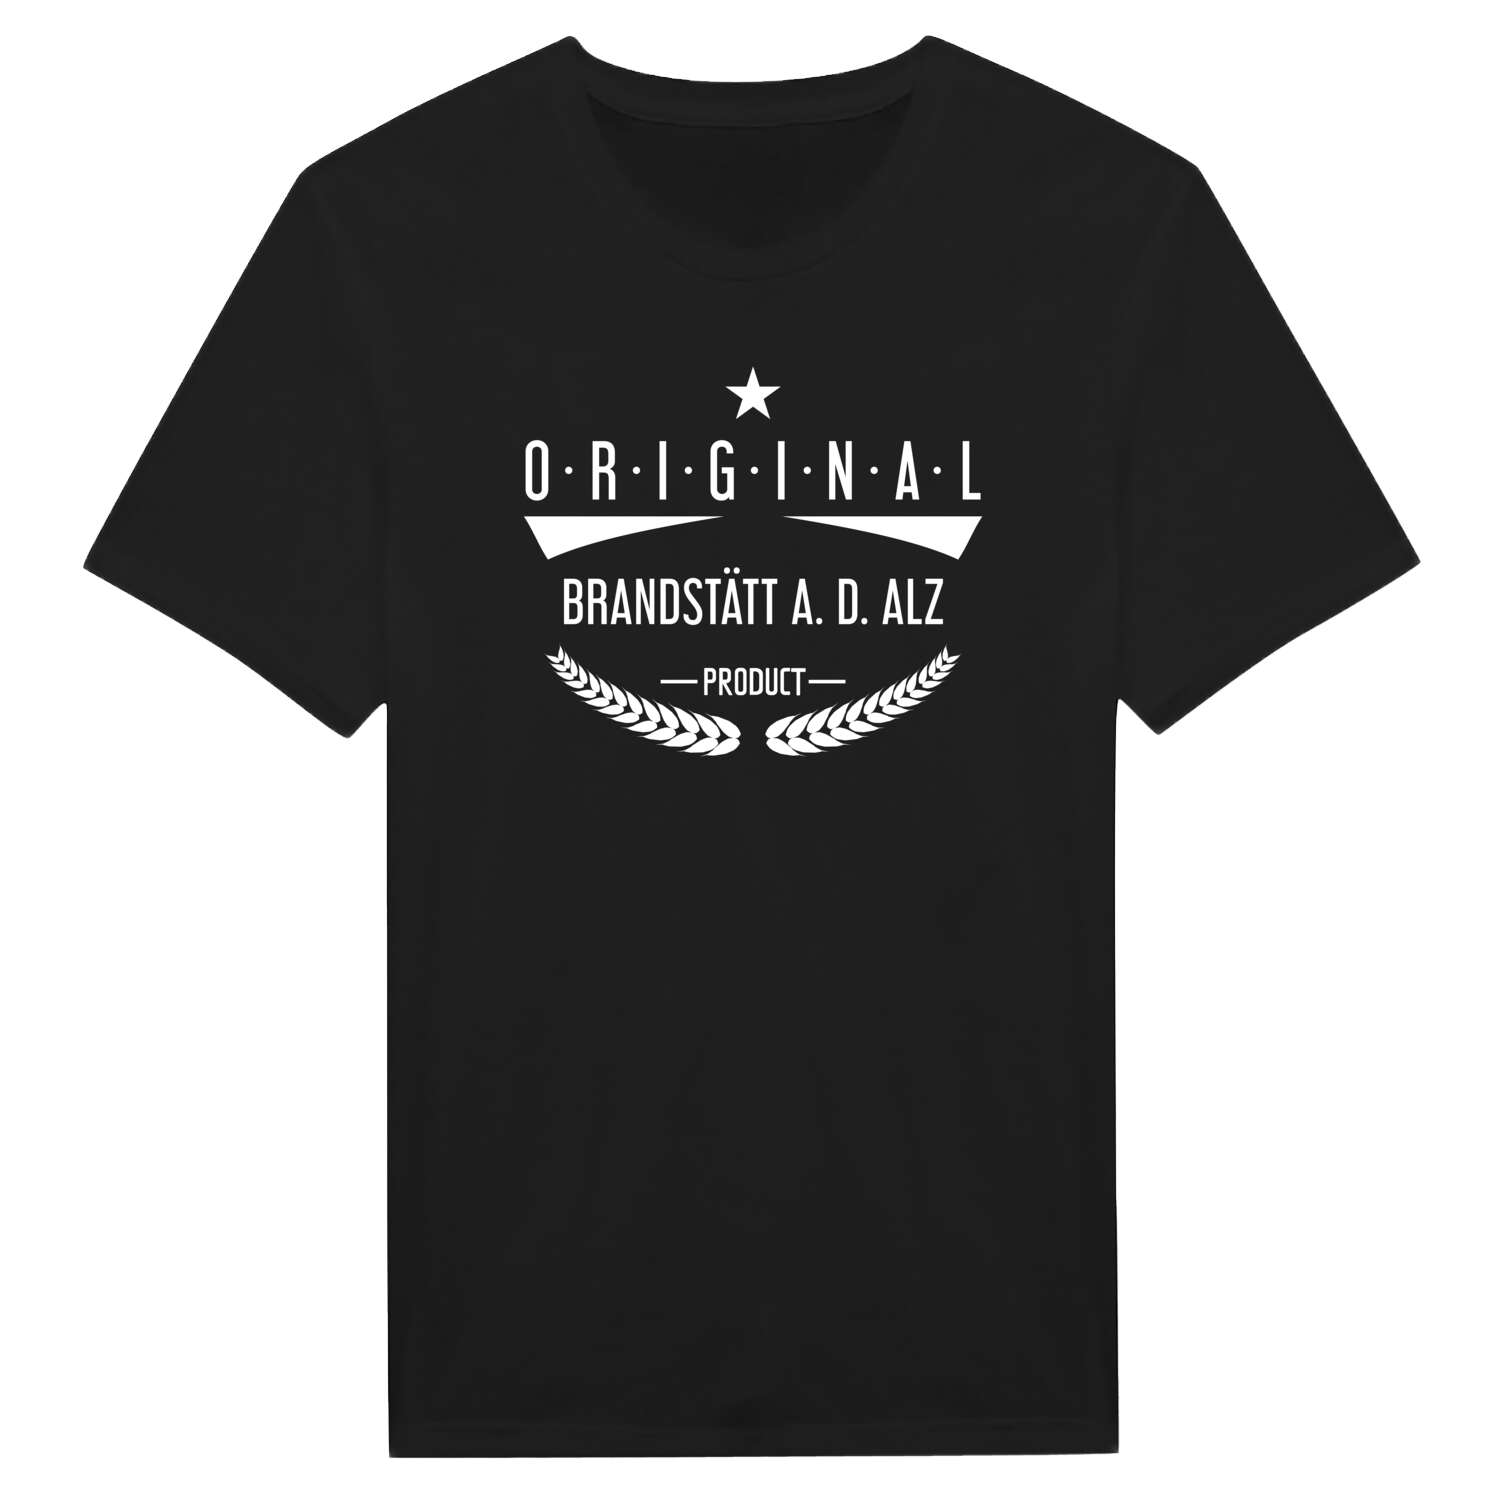 Brandstätt a. d. Alz T-Shirt »Original Product«